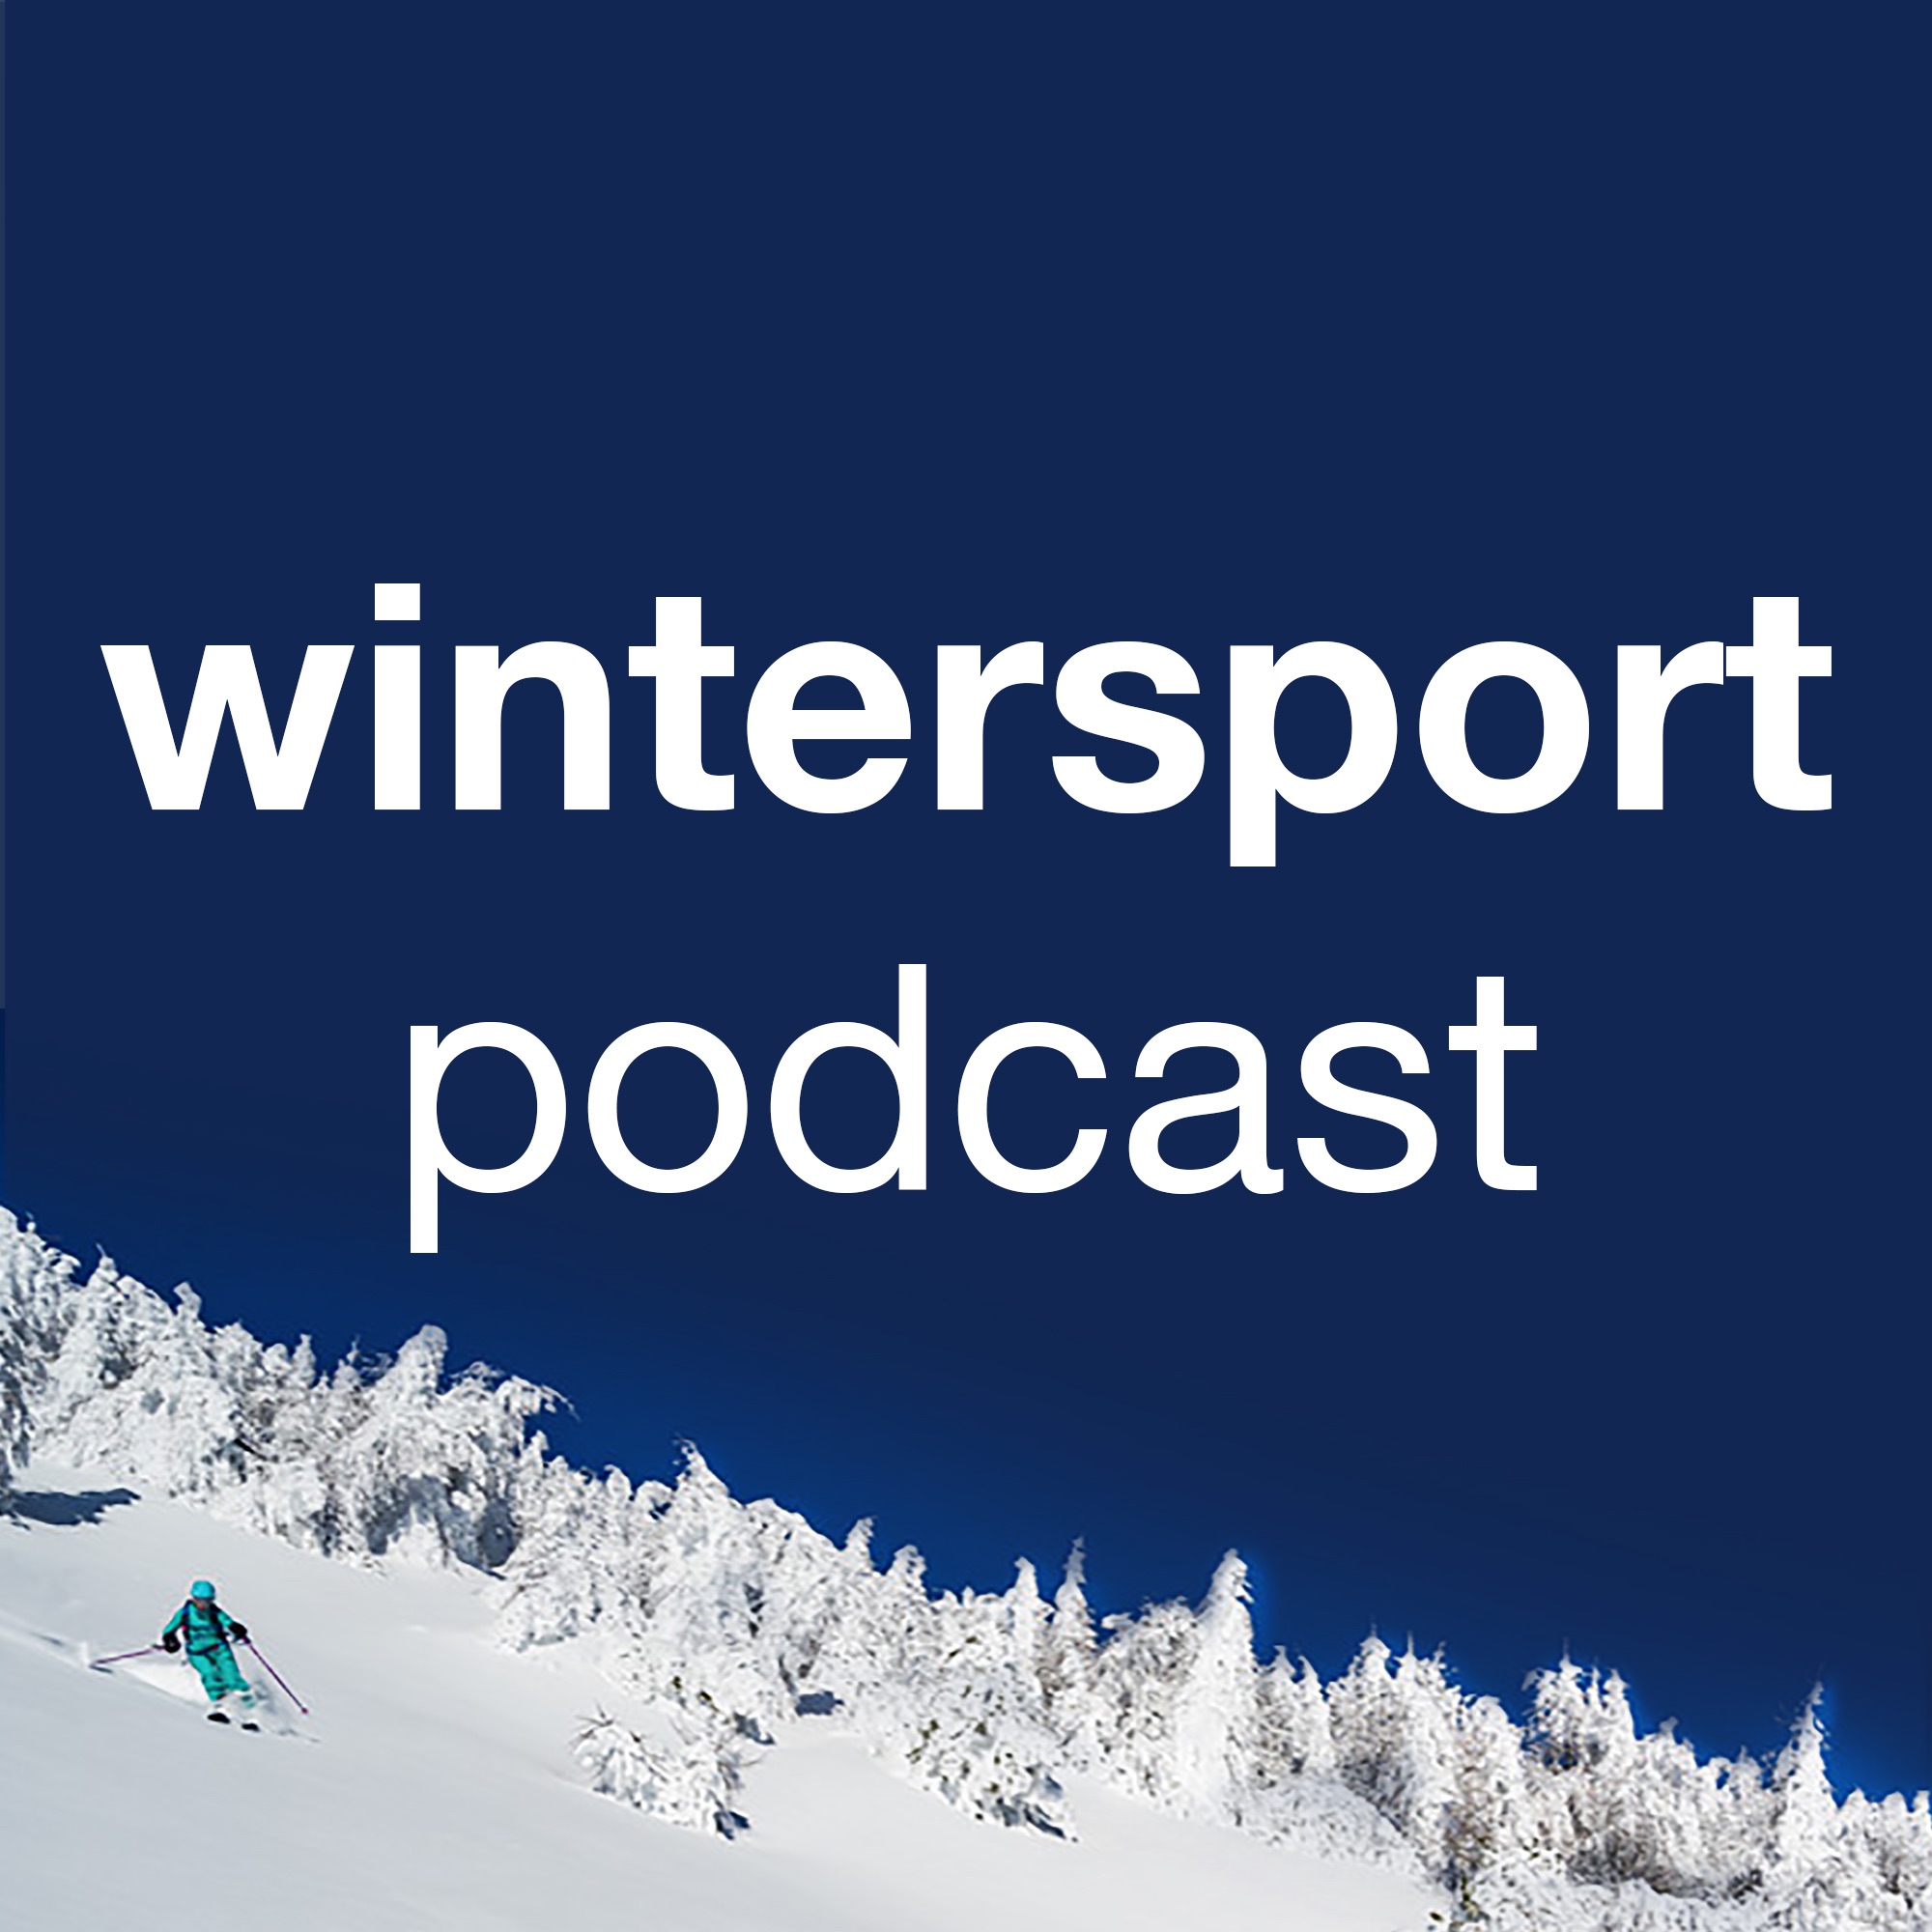 Wintersport Podcast logo